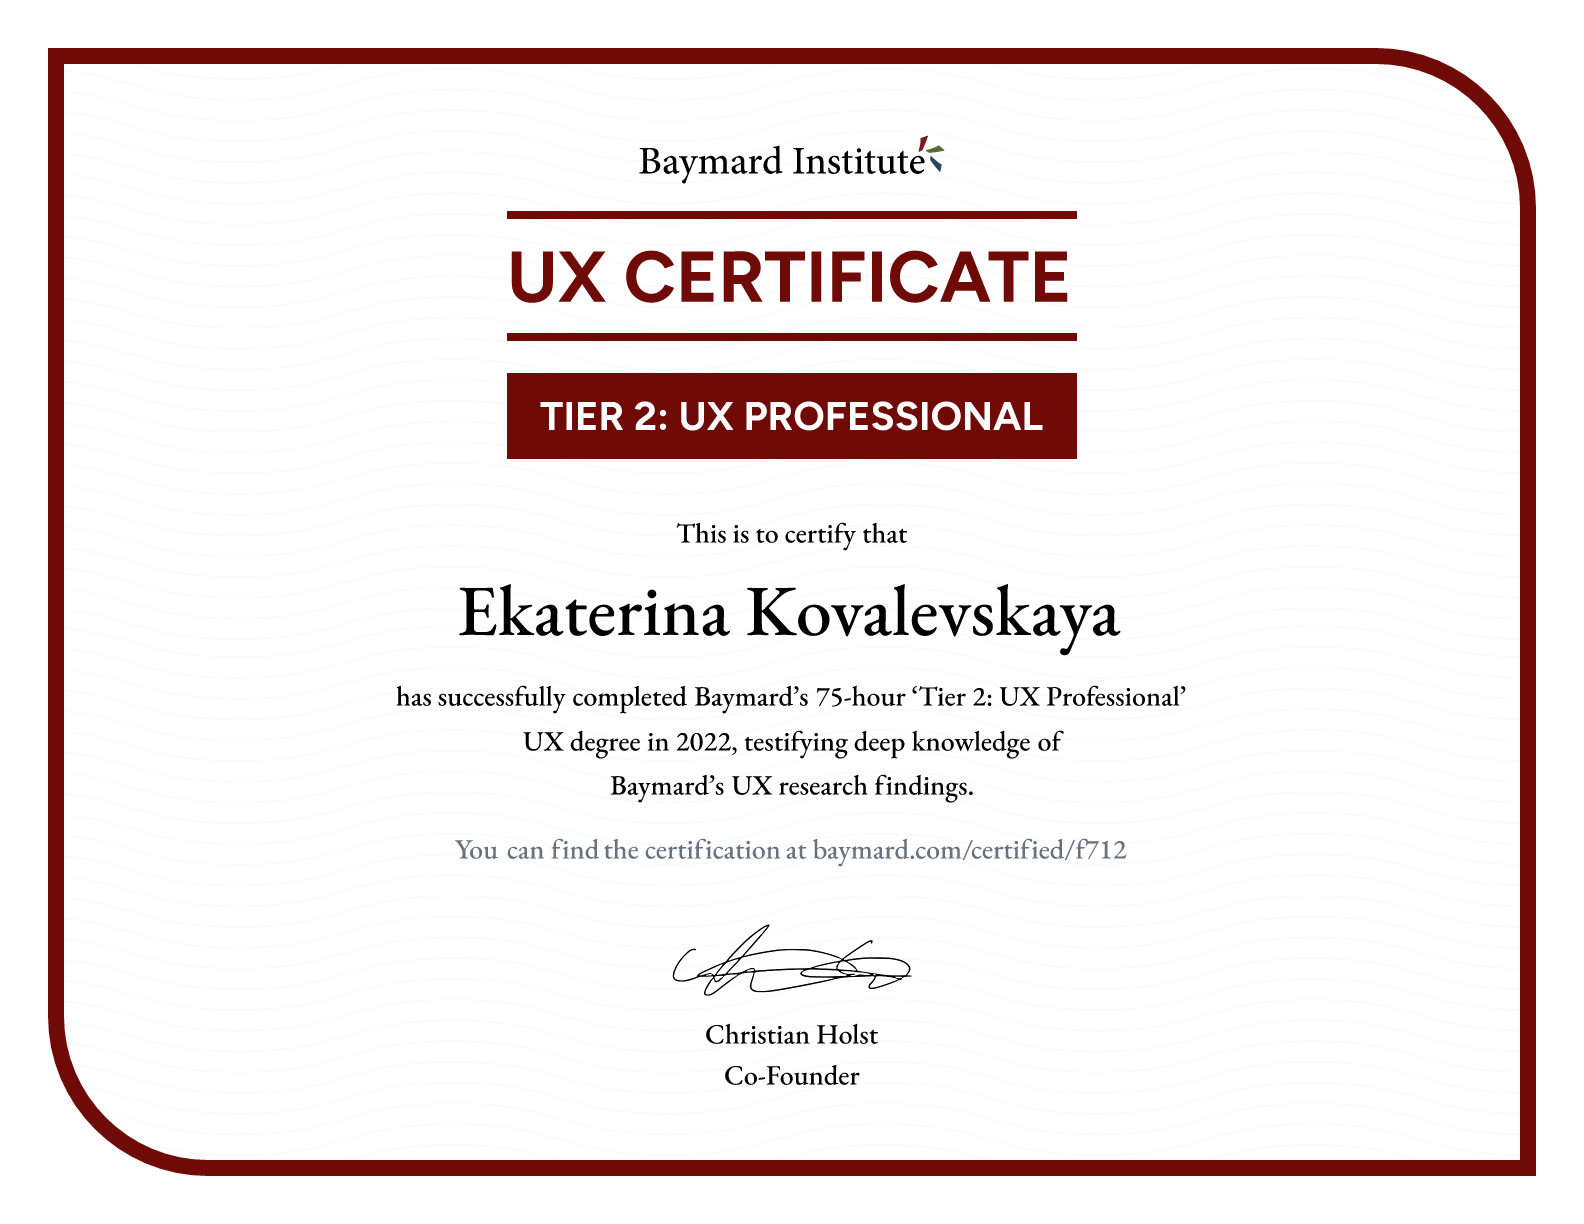 Ekaterina Kovalevskaya’s certificate